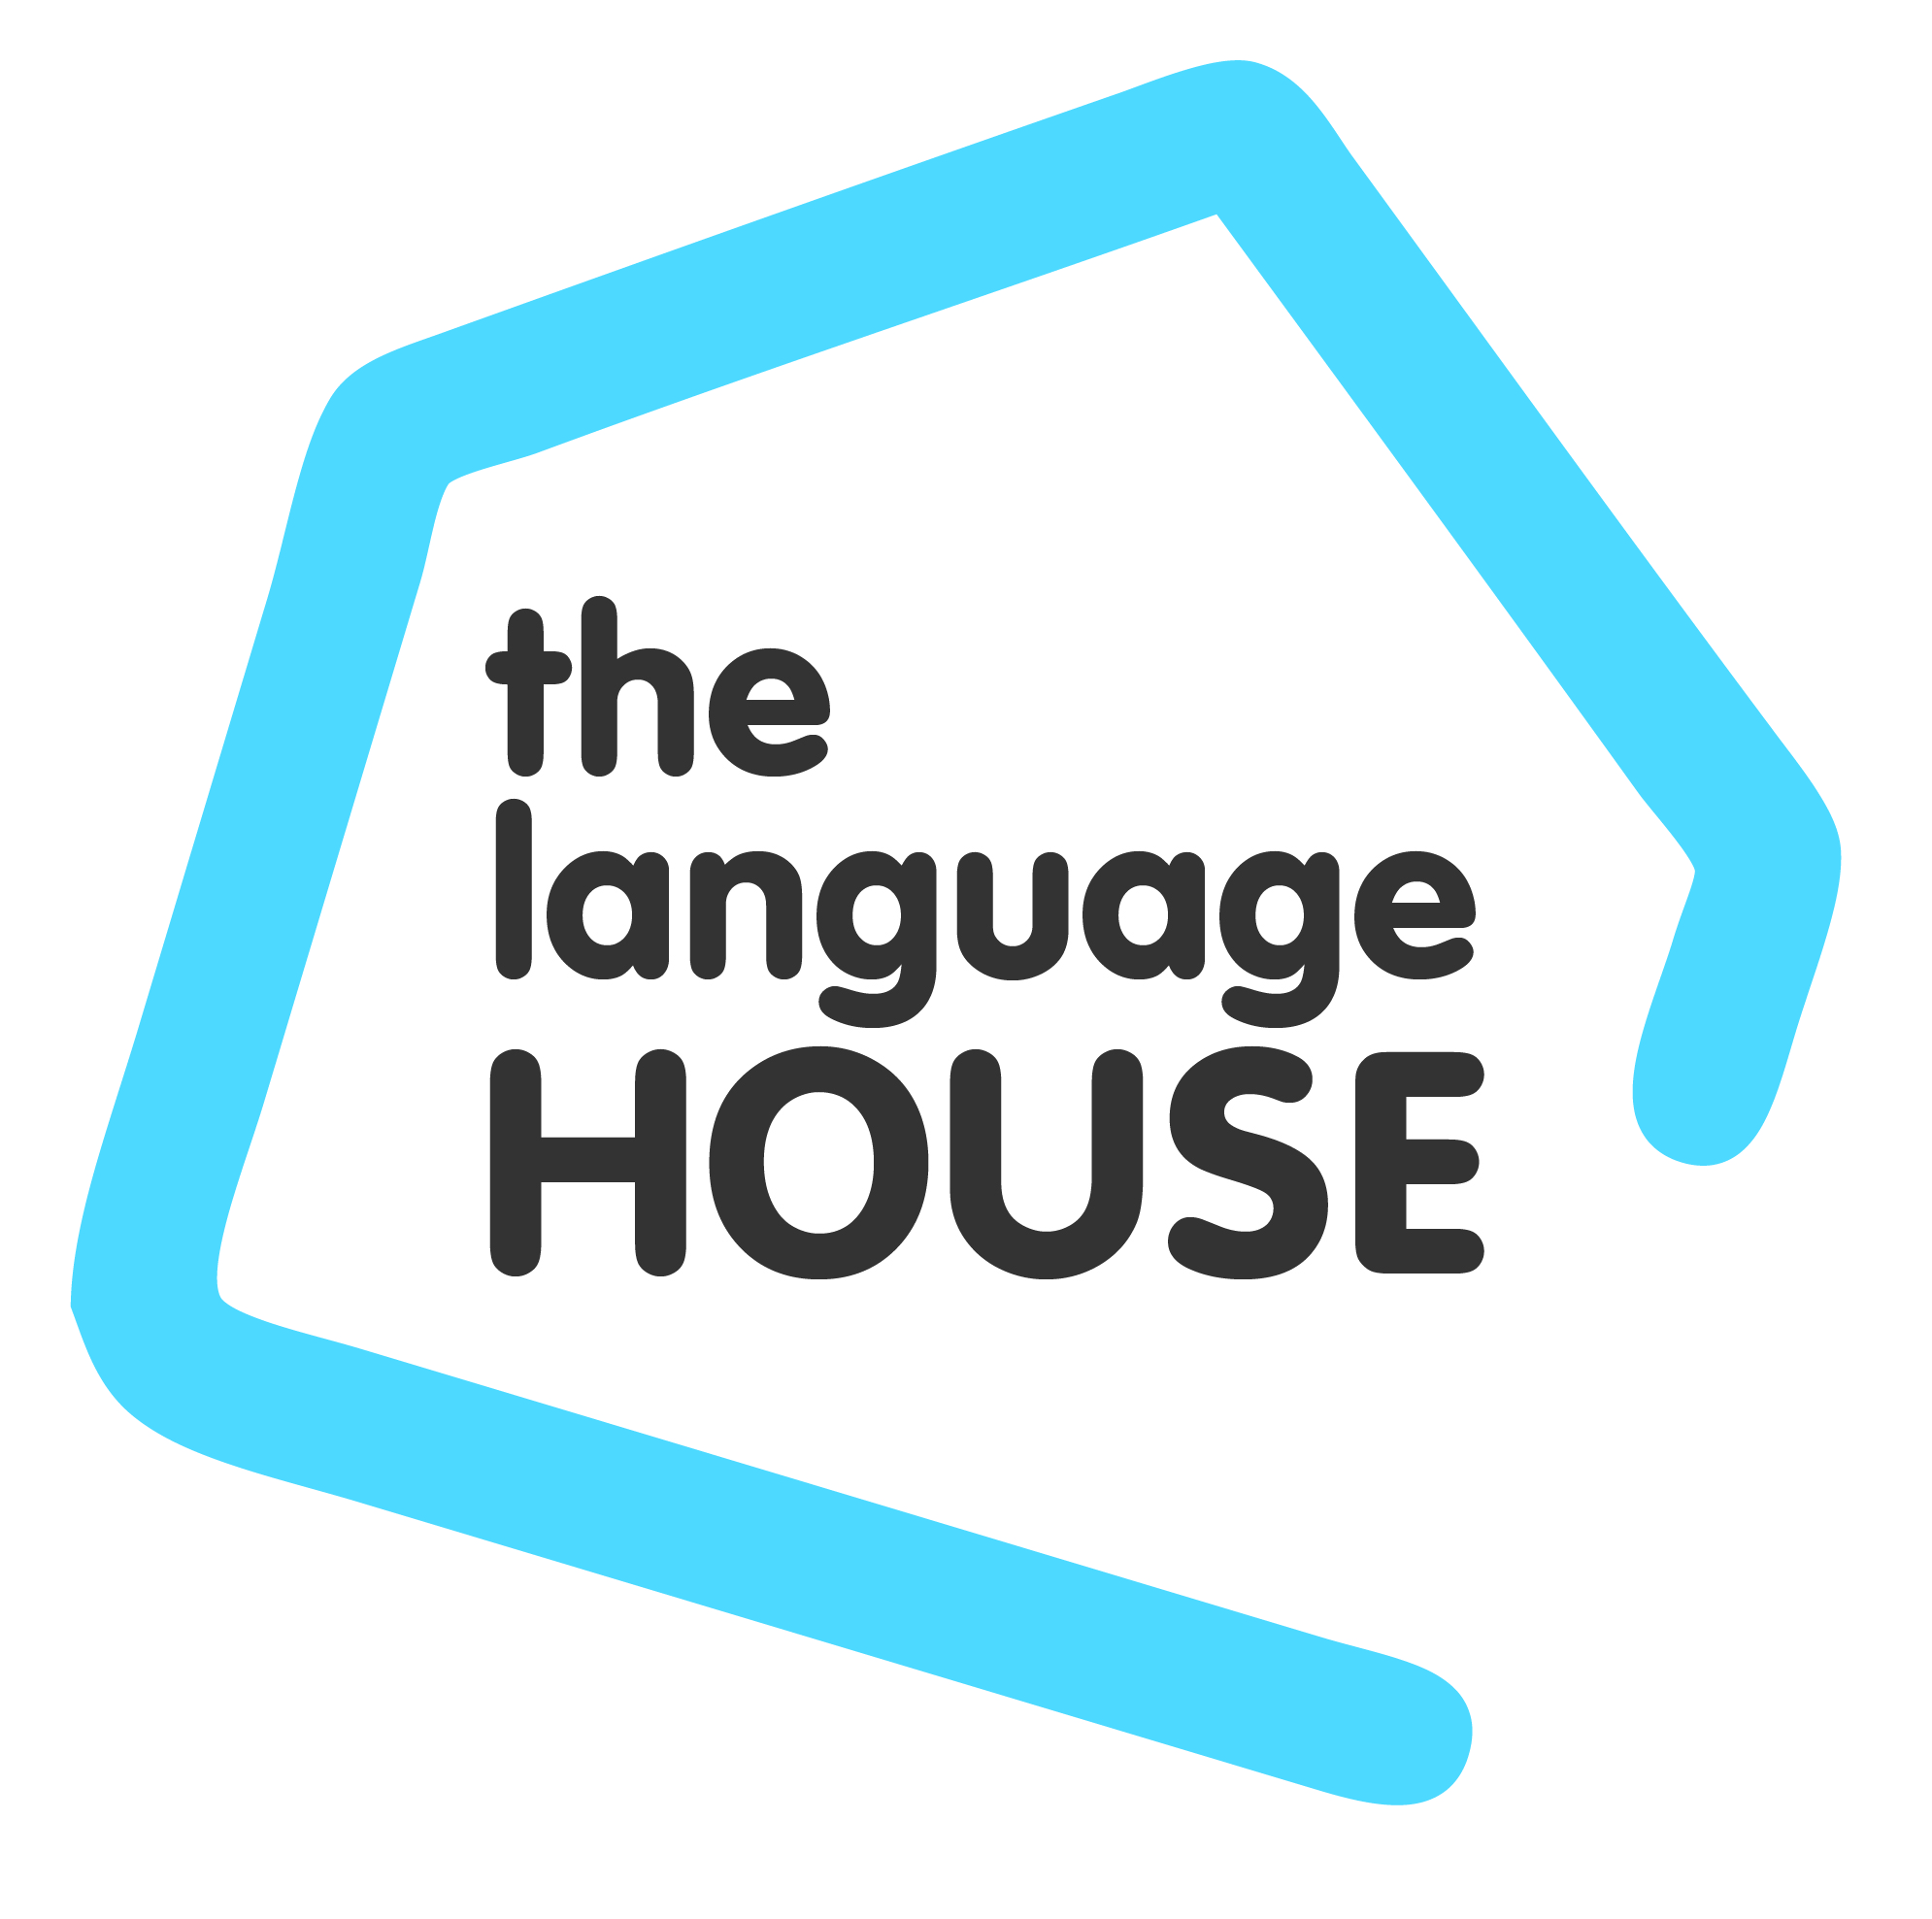 The Language House Liverpool